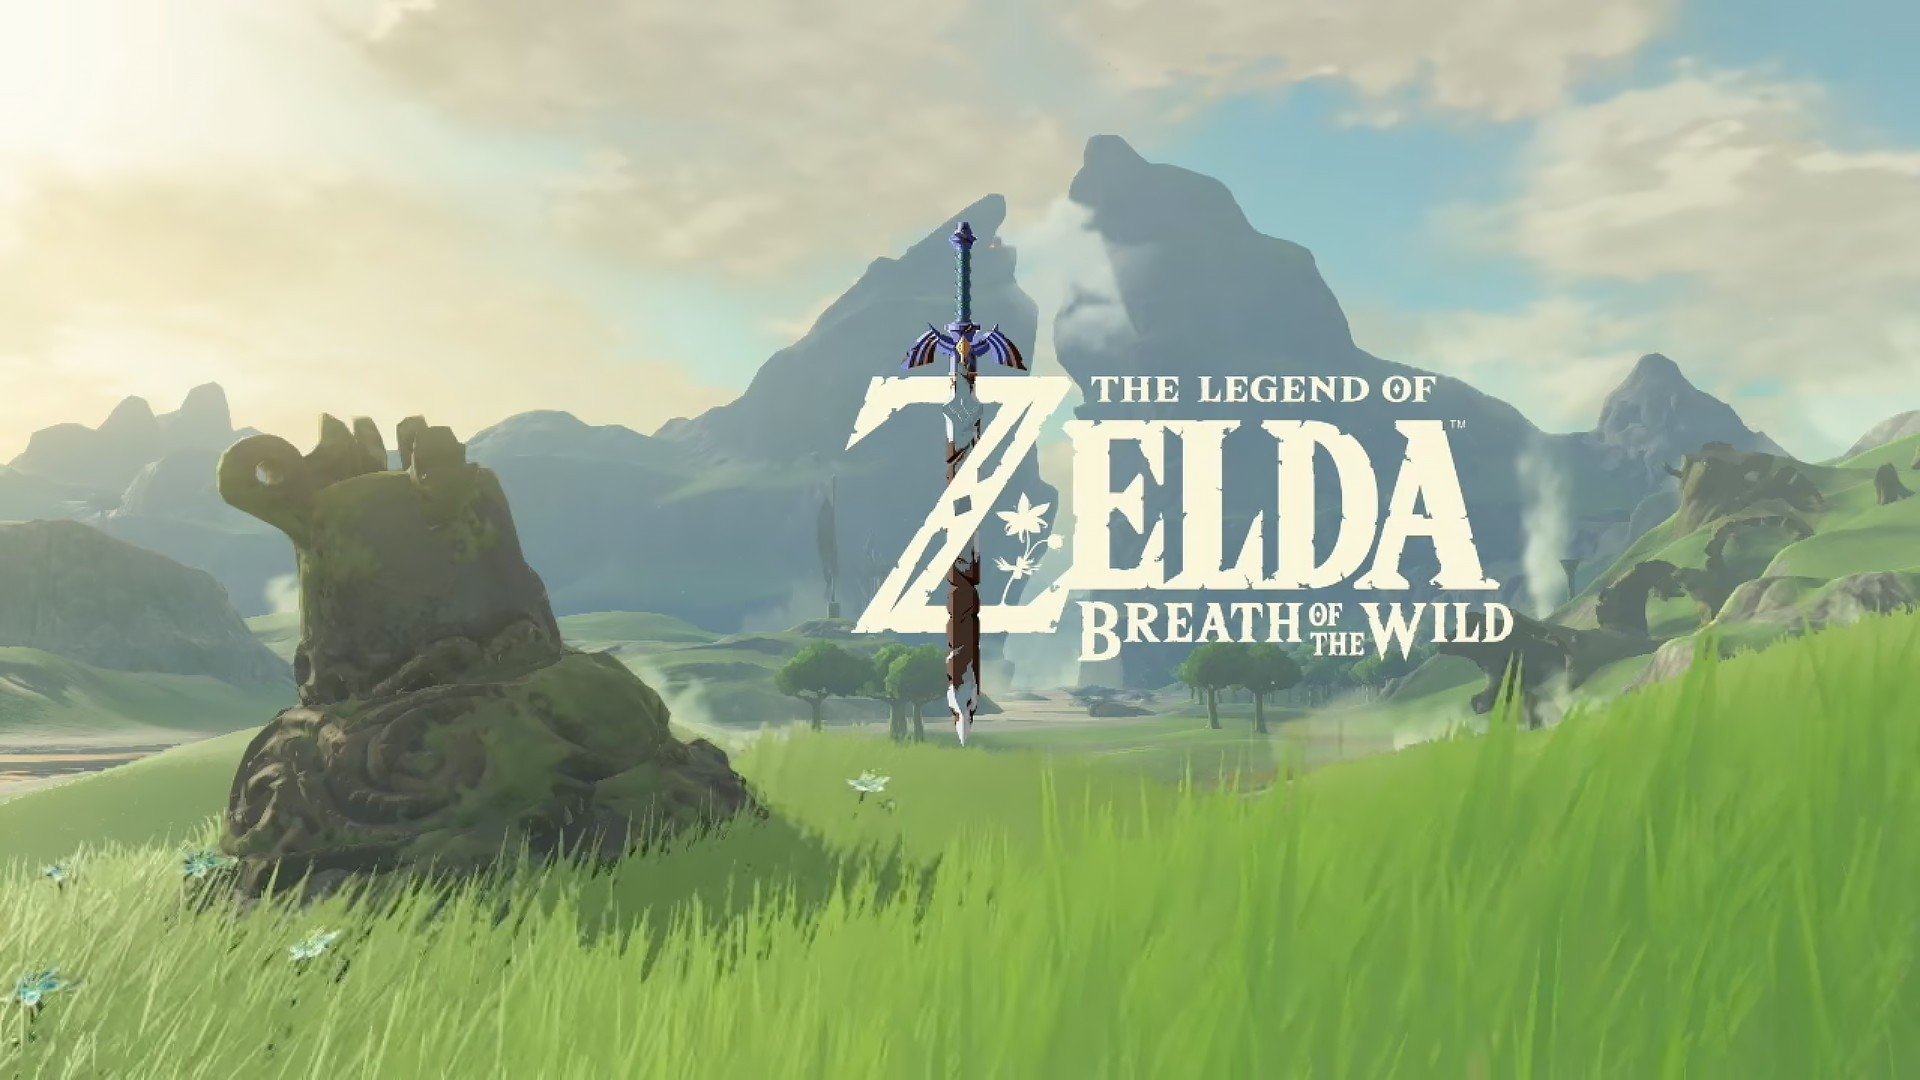 140 The Legend of Zelda Breath of the Wild HD Wallpapers